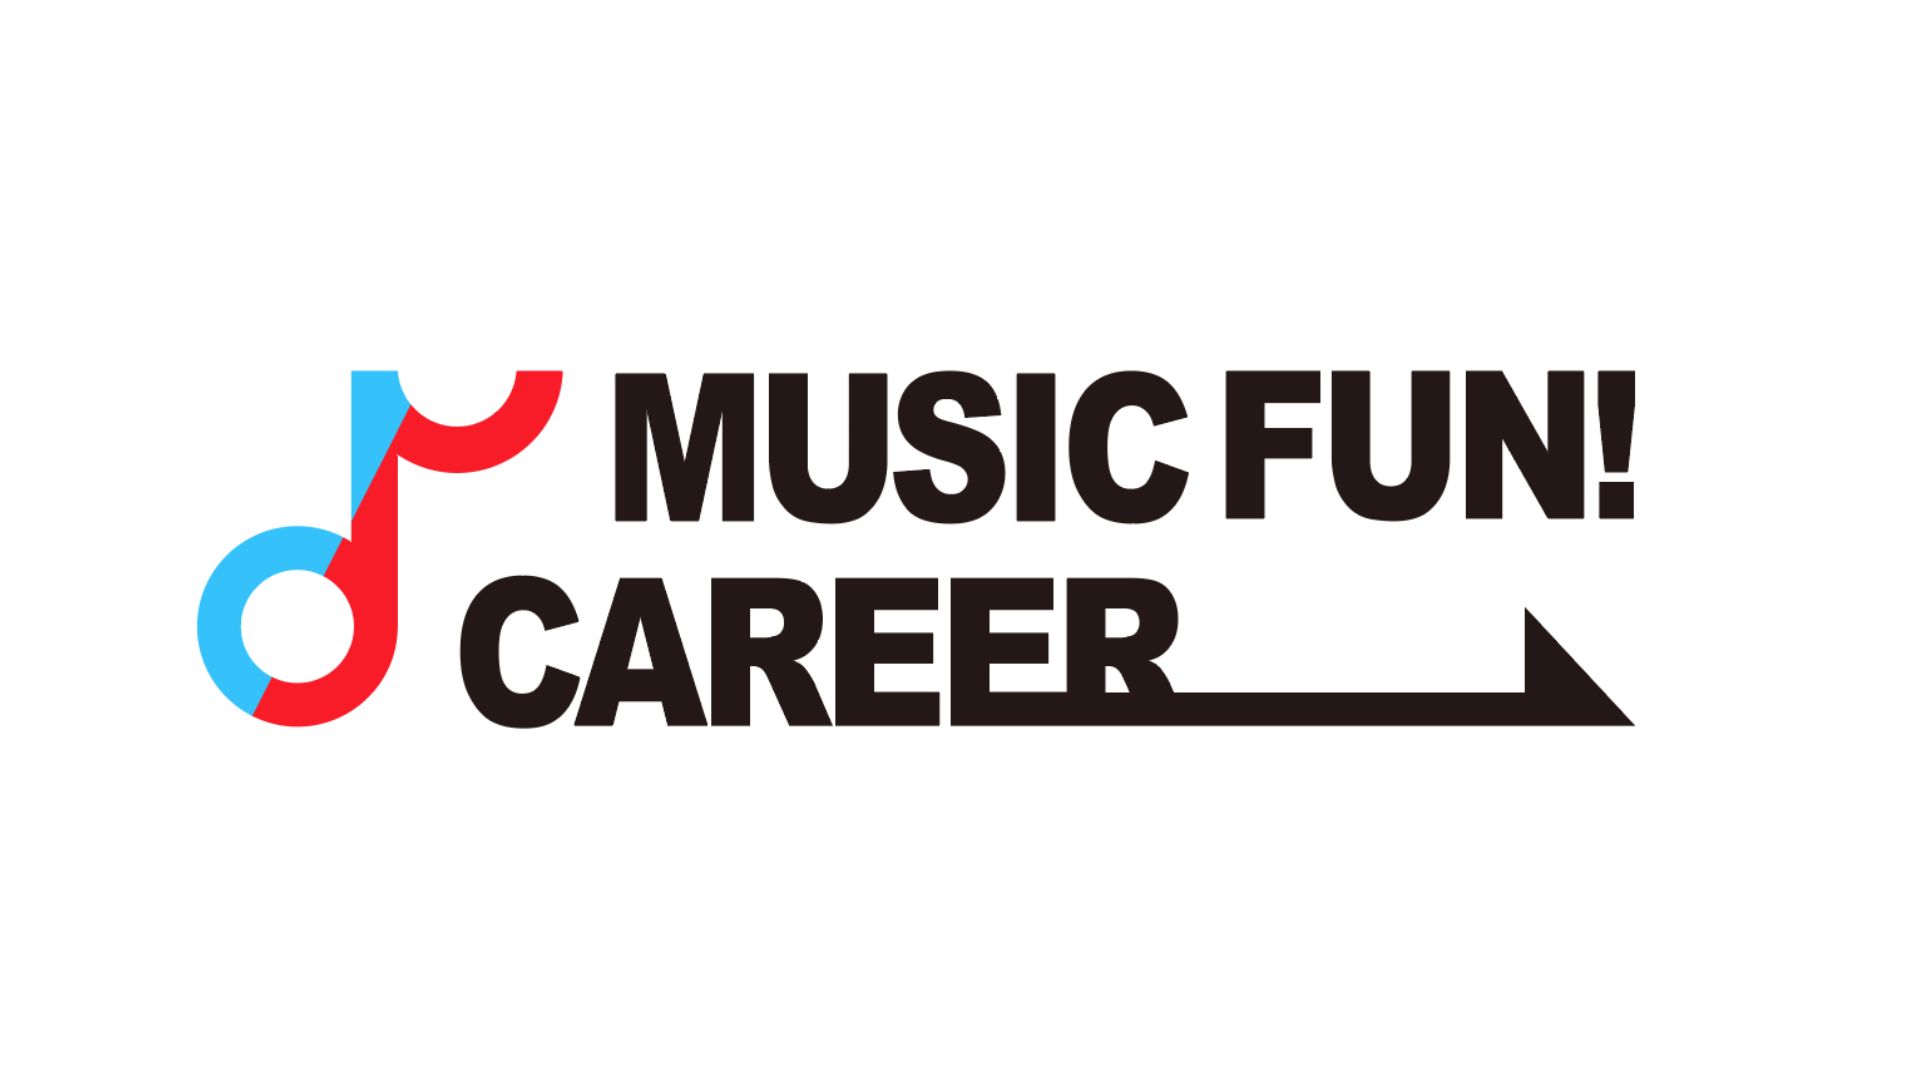 FIREBUG、音楽業界特化型求人掲載サービス「MUSIC FUN! CAREER」を9月6日(火)より提供開始 ～音楽業界を牽引する有名企業がサービスローンチと同時に求人掲載を開始～